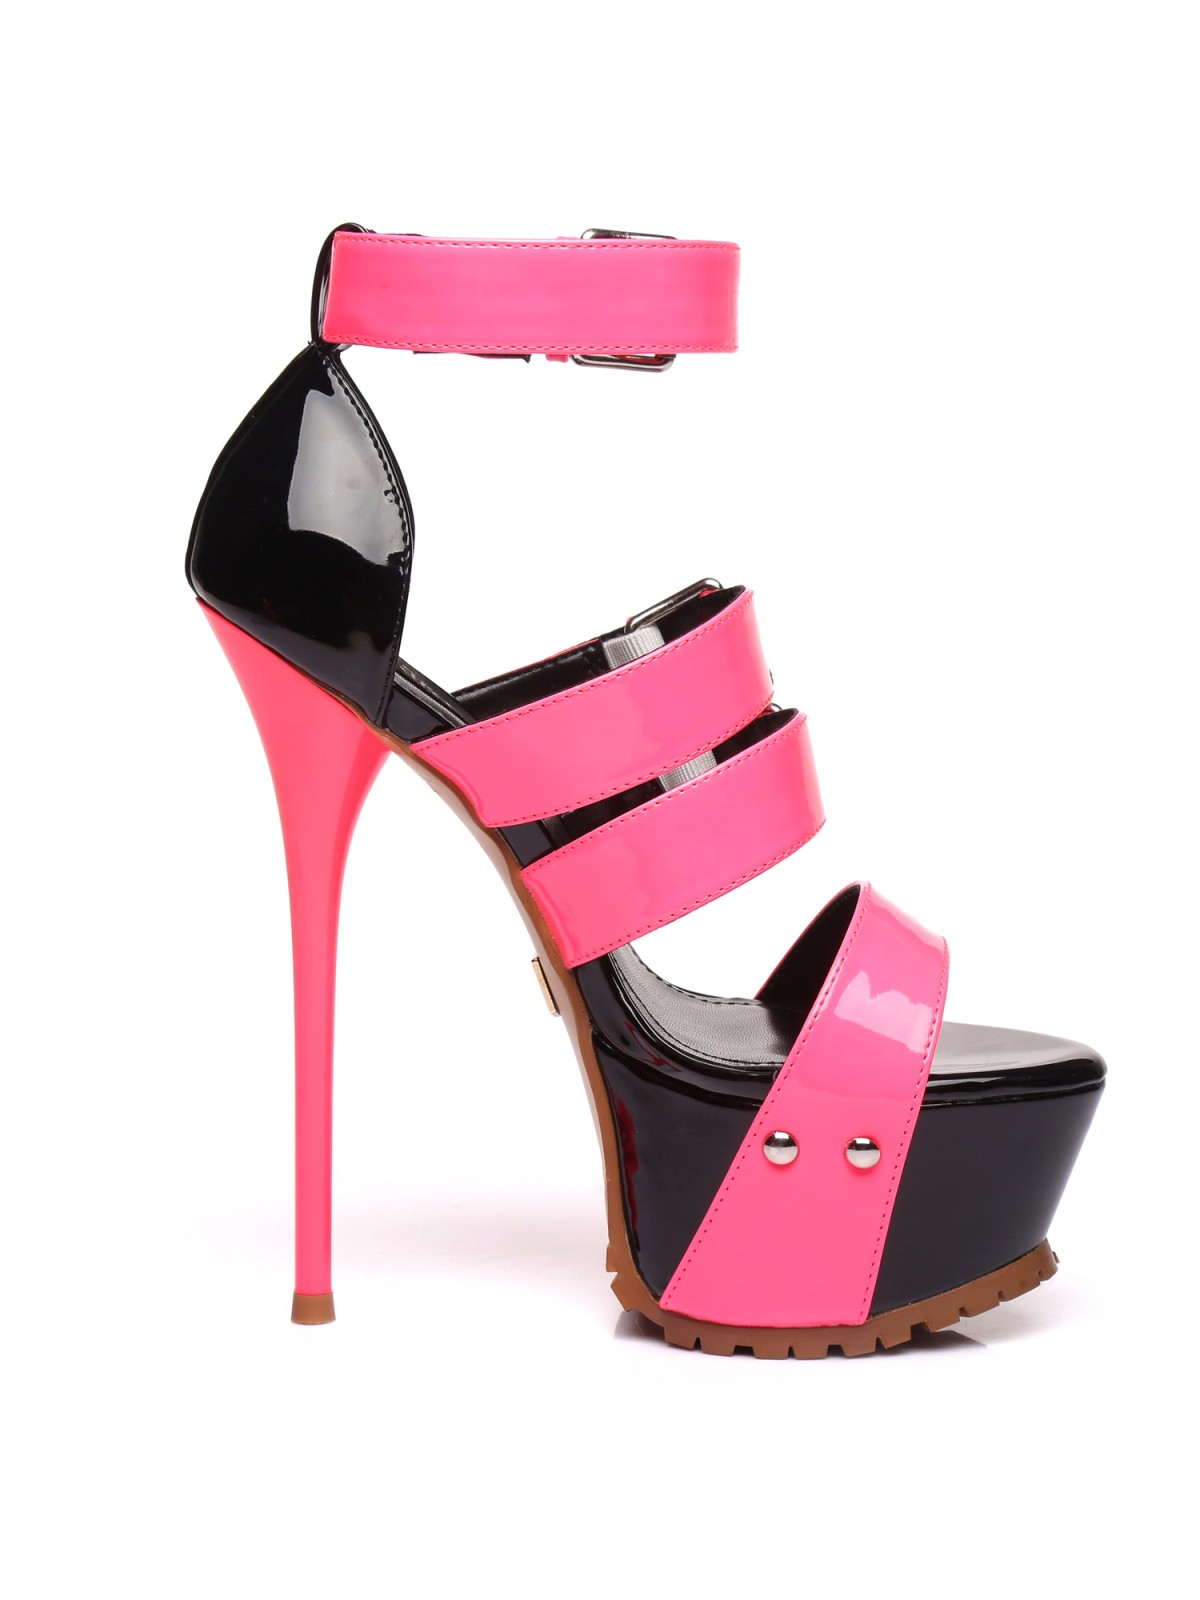 Giaro SIENNA black pink platform sandals shiny with straps